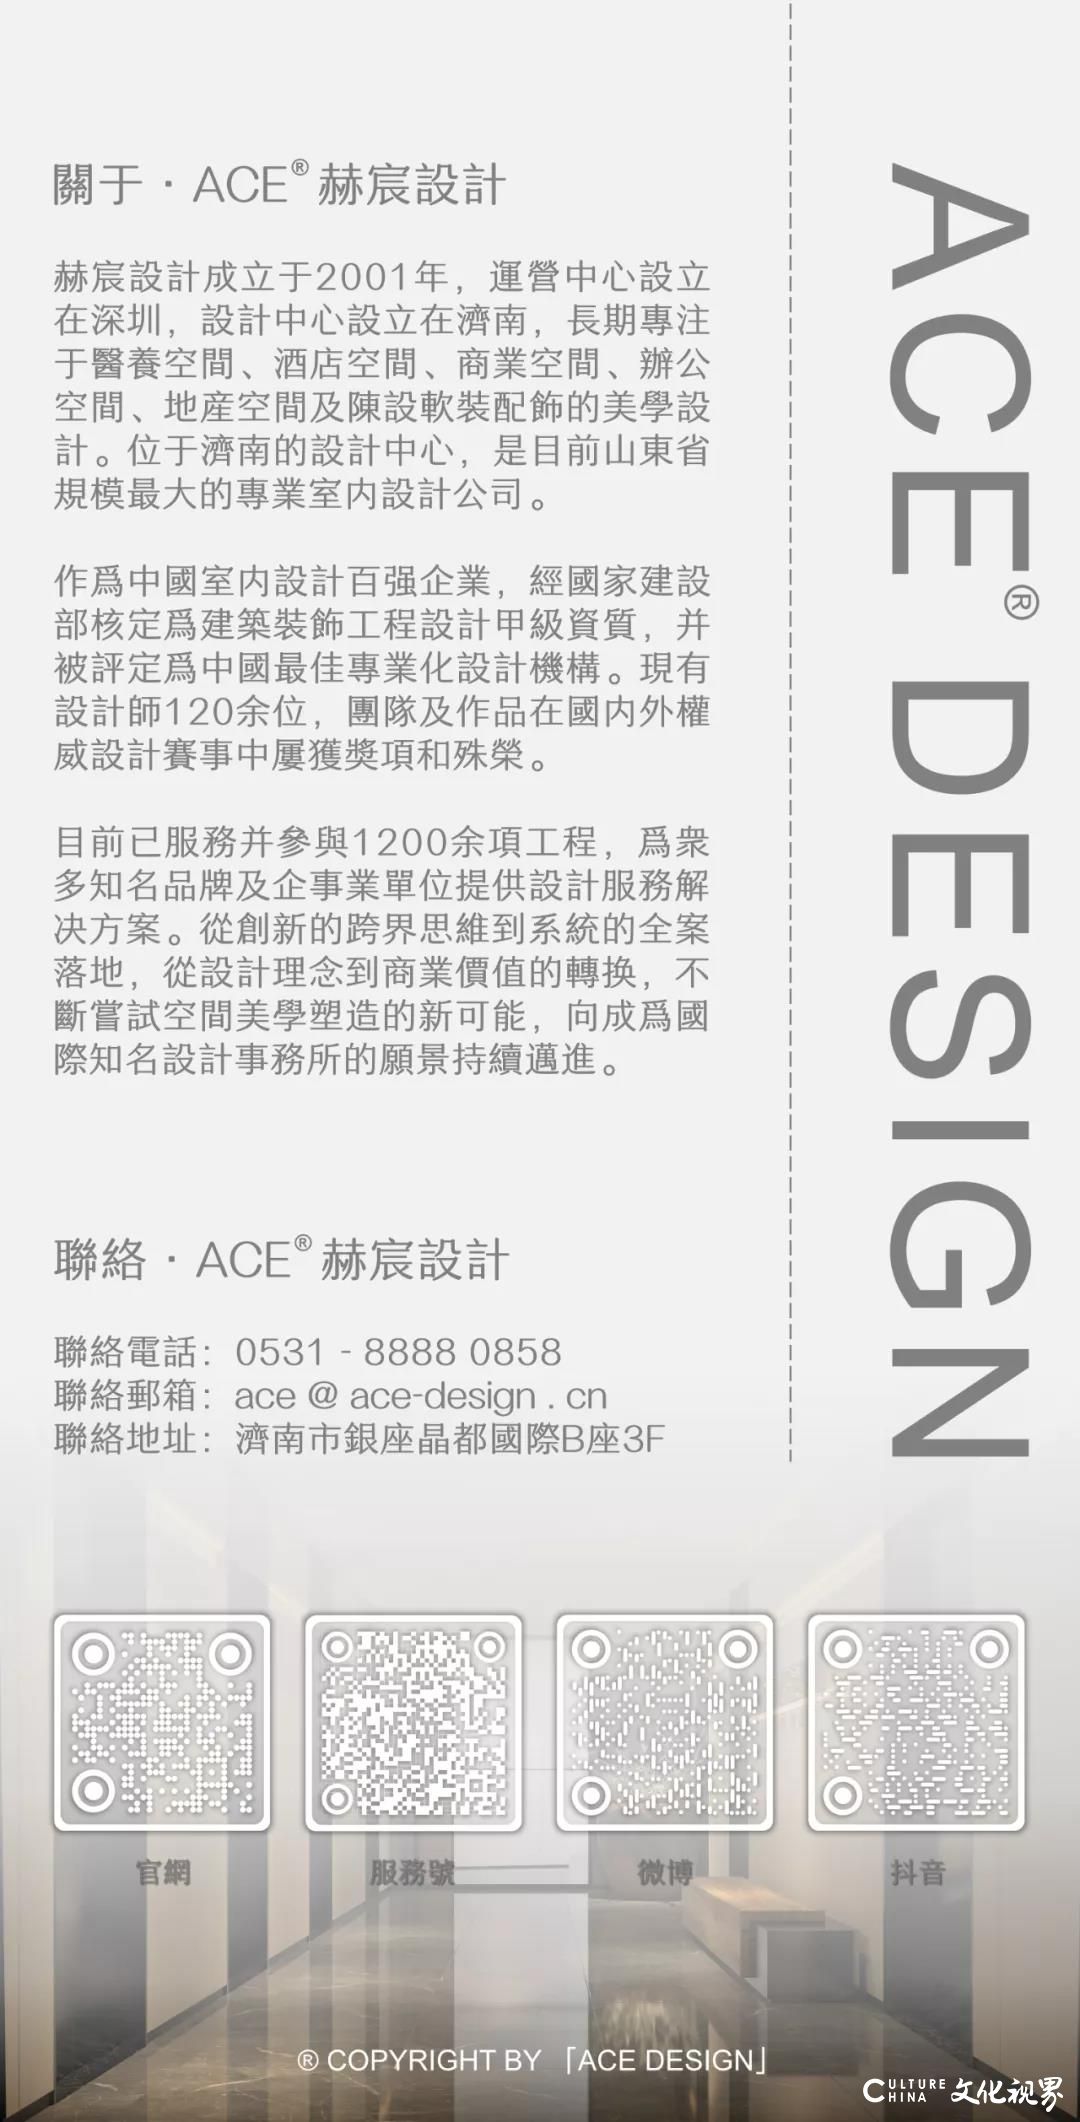 ACE赫宸设计创始人栾滨受邀出席山东城际设计交流论坛并致辞